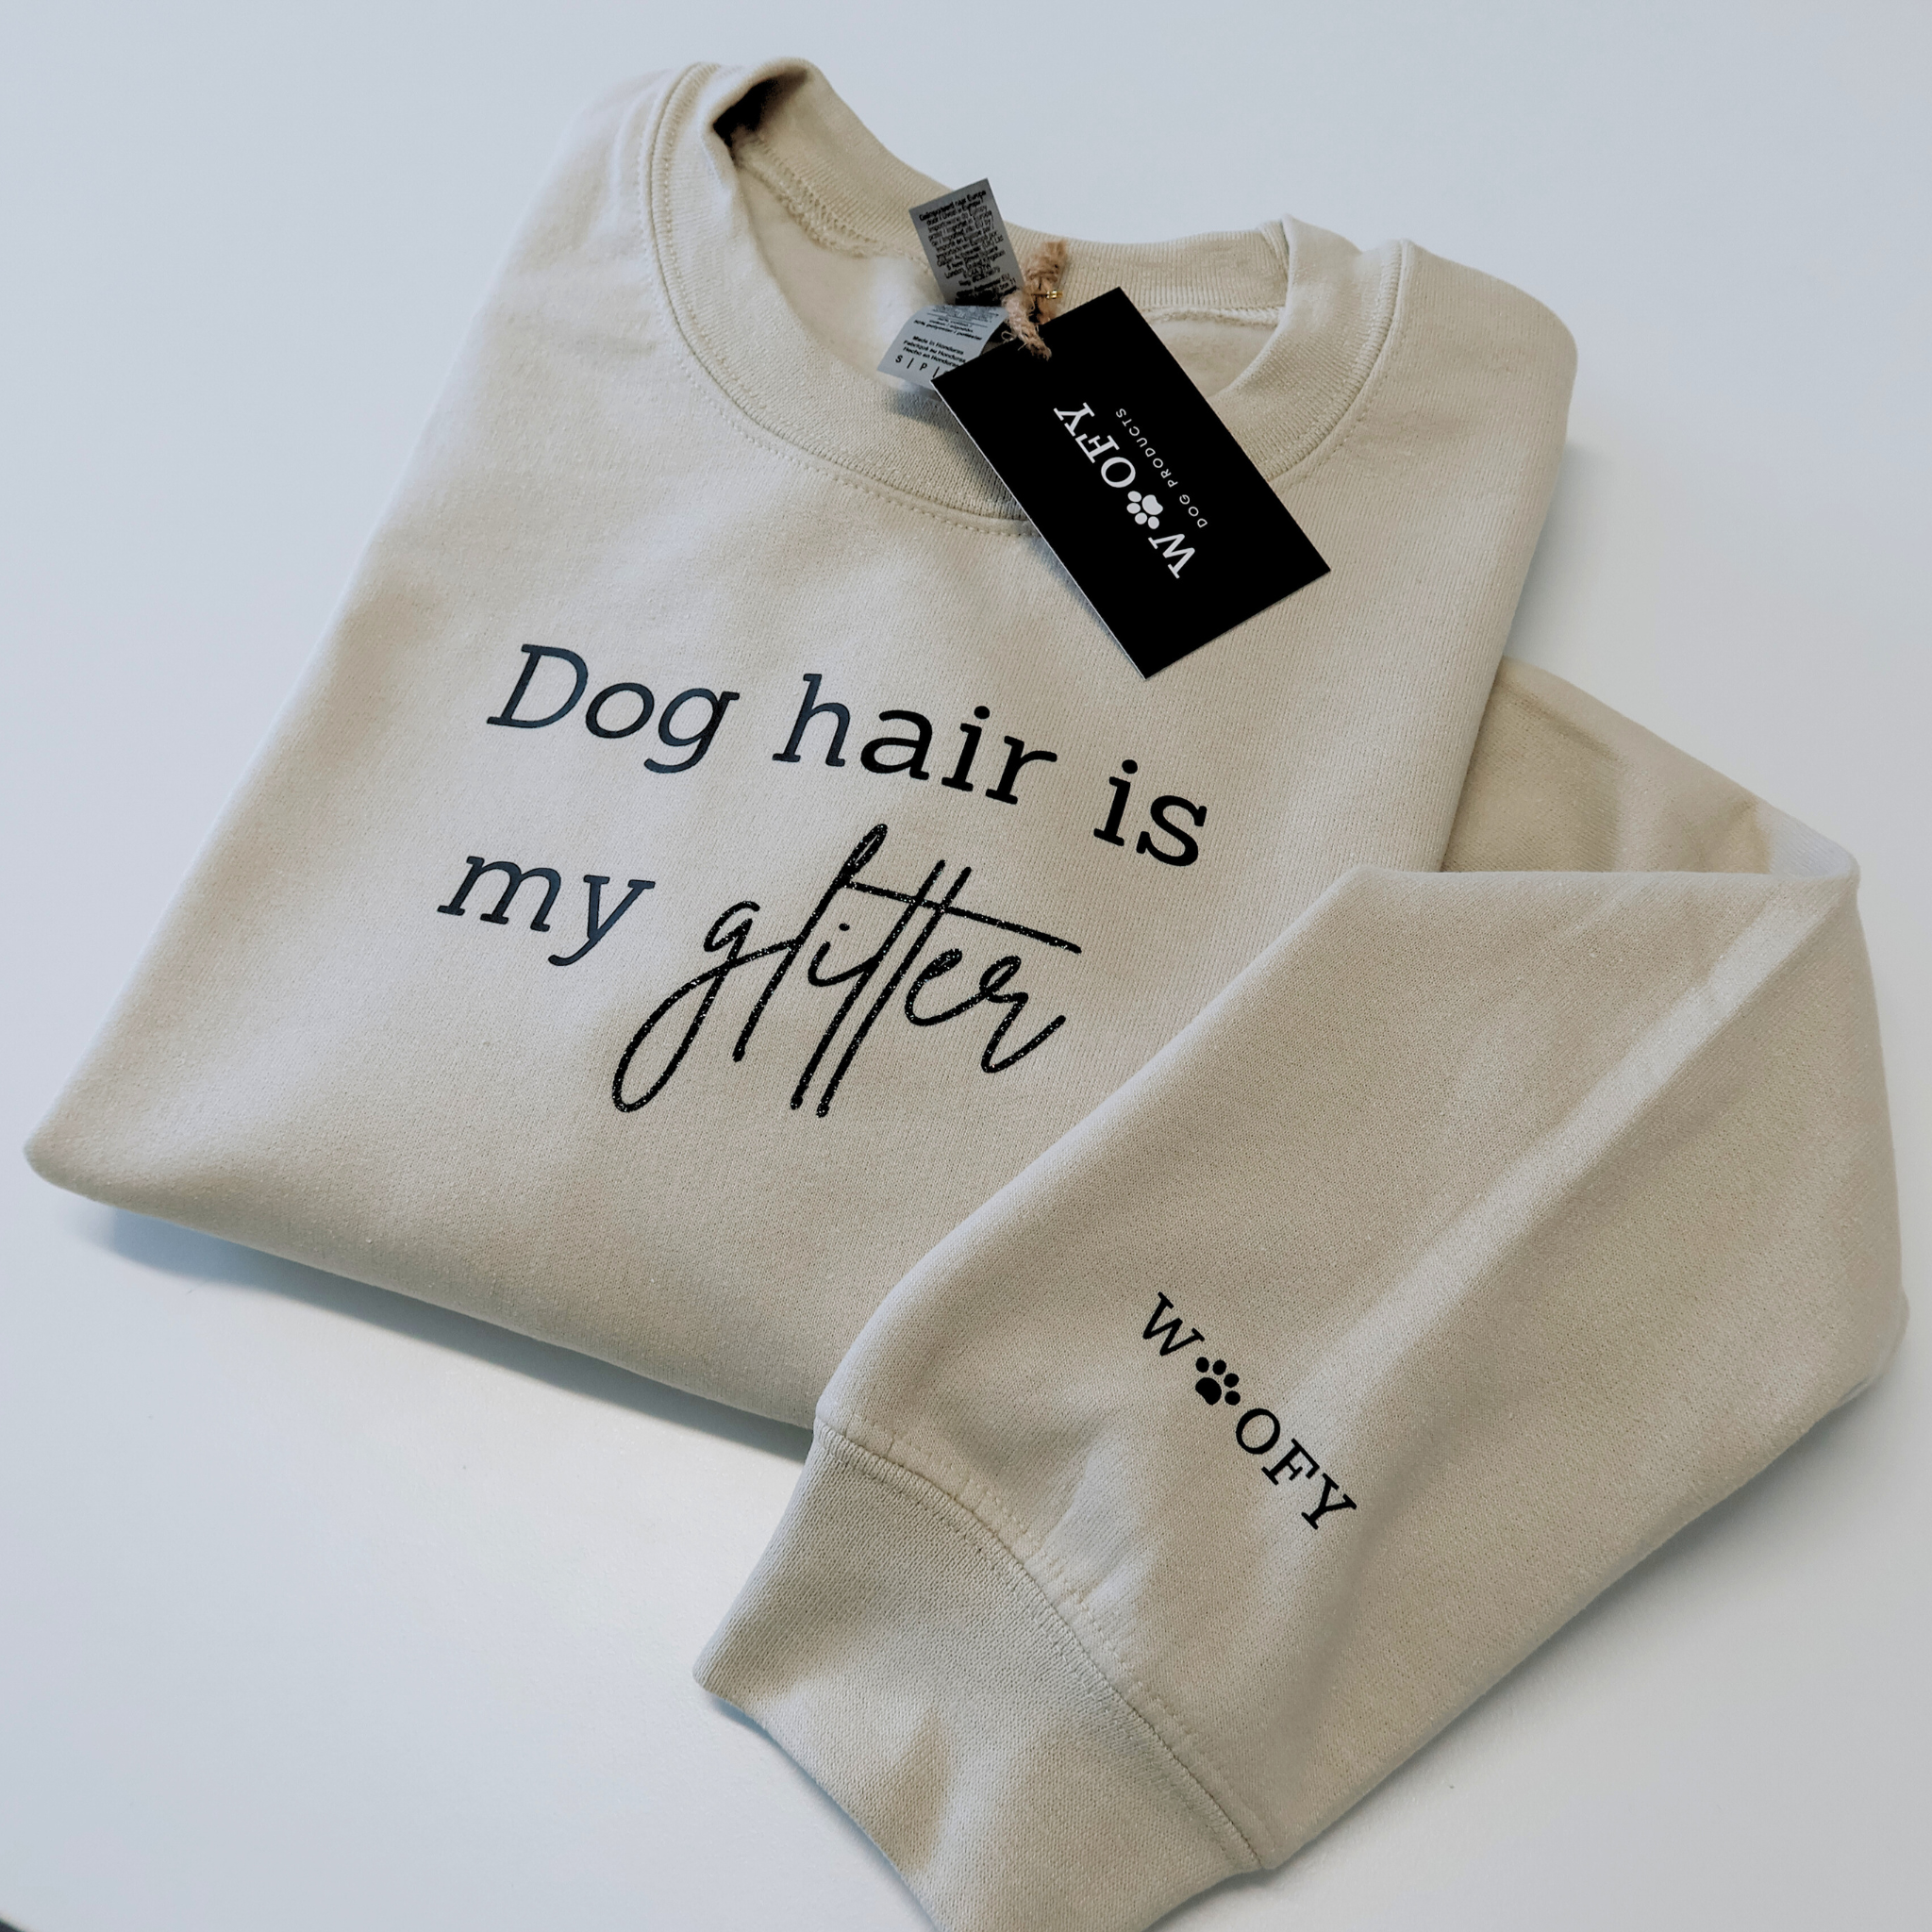 'Dog hair is my glitter' -collegepaita